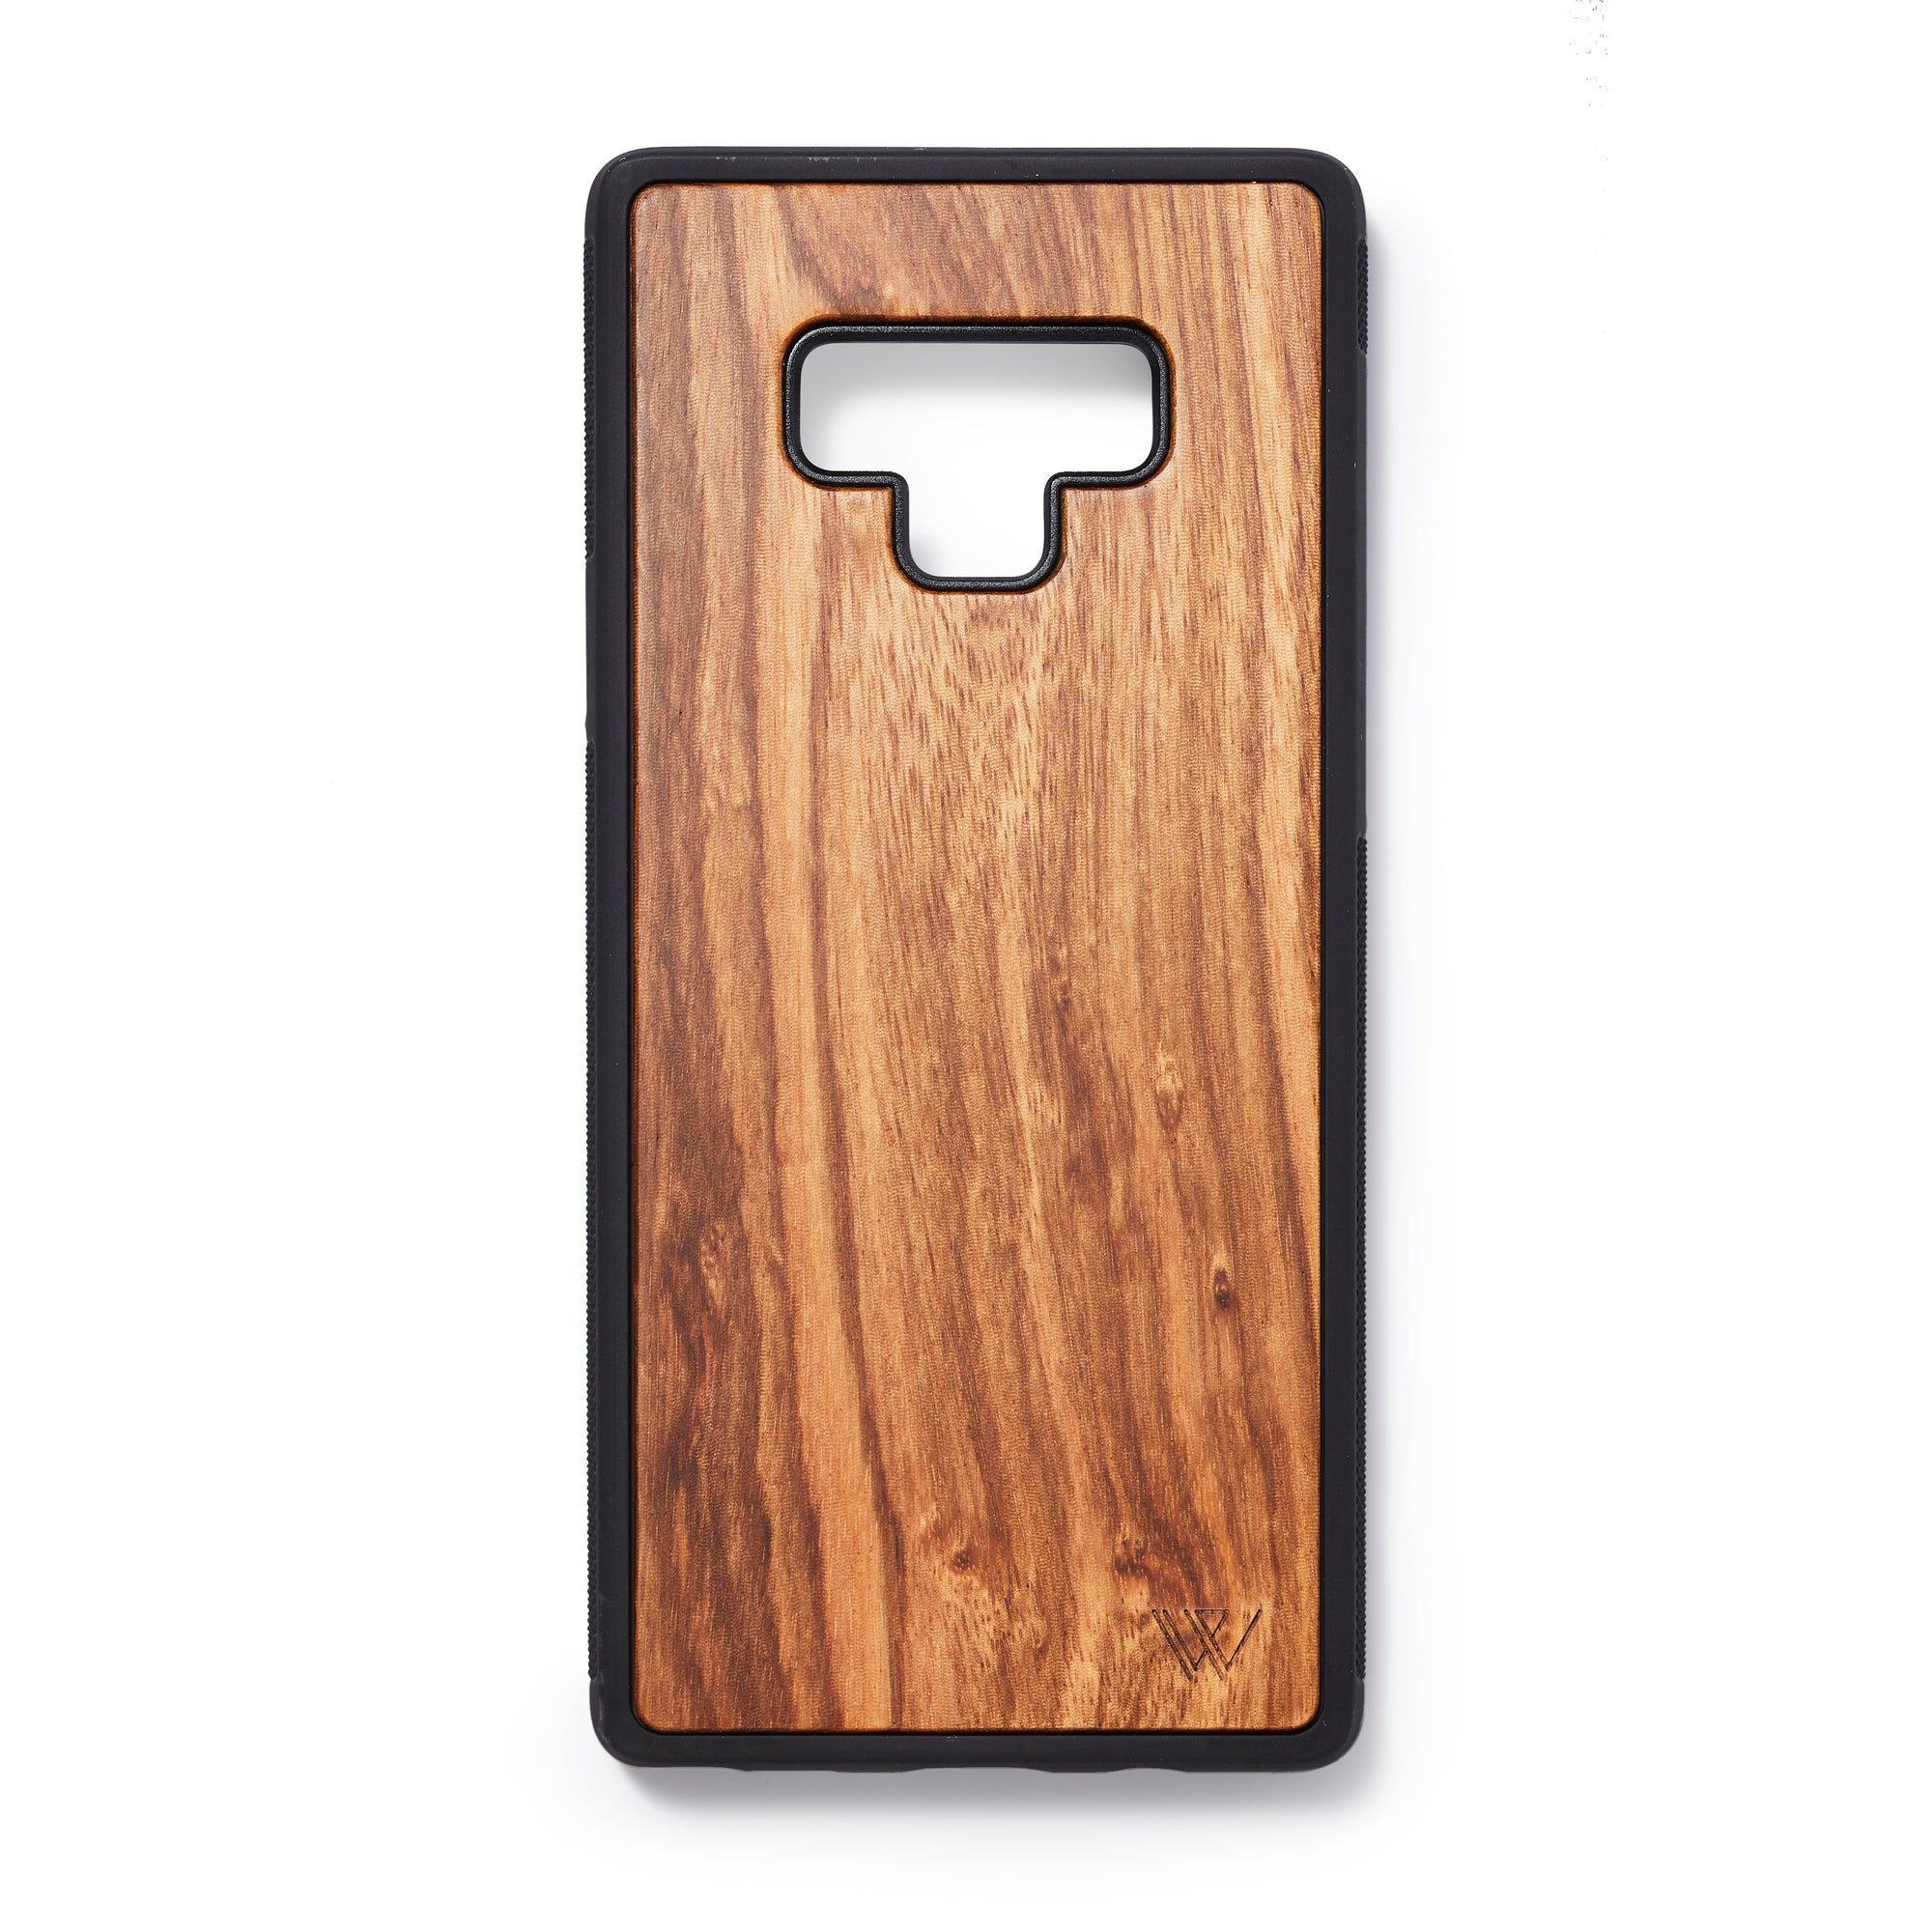 Wooden back case Samsung Note 9 zebrano - Woodstylz